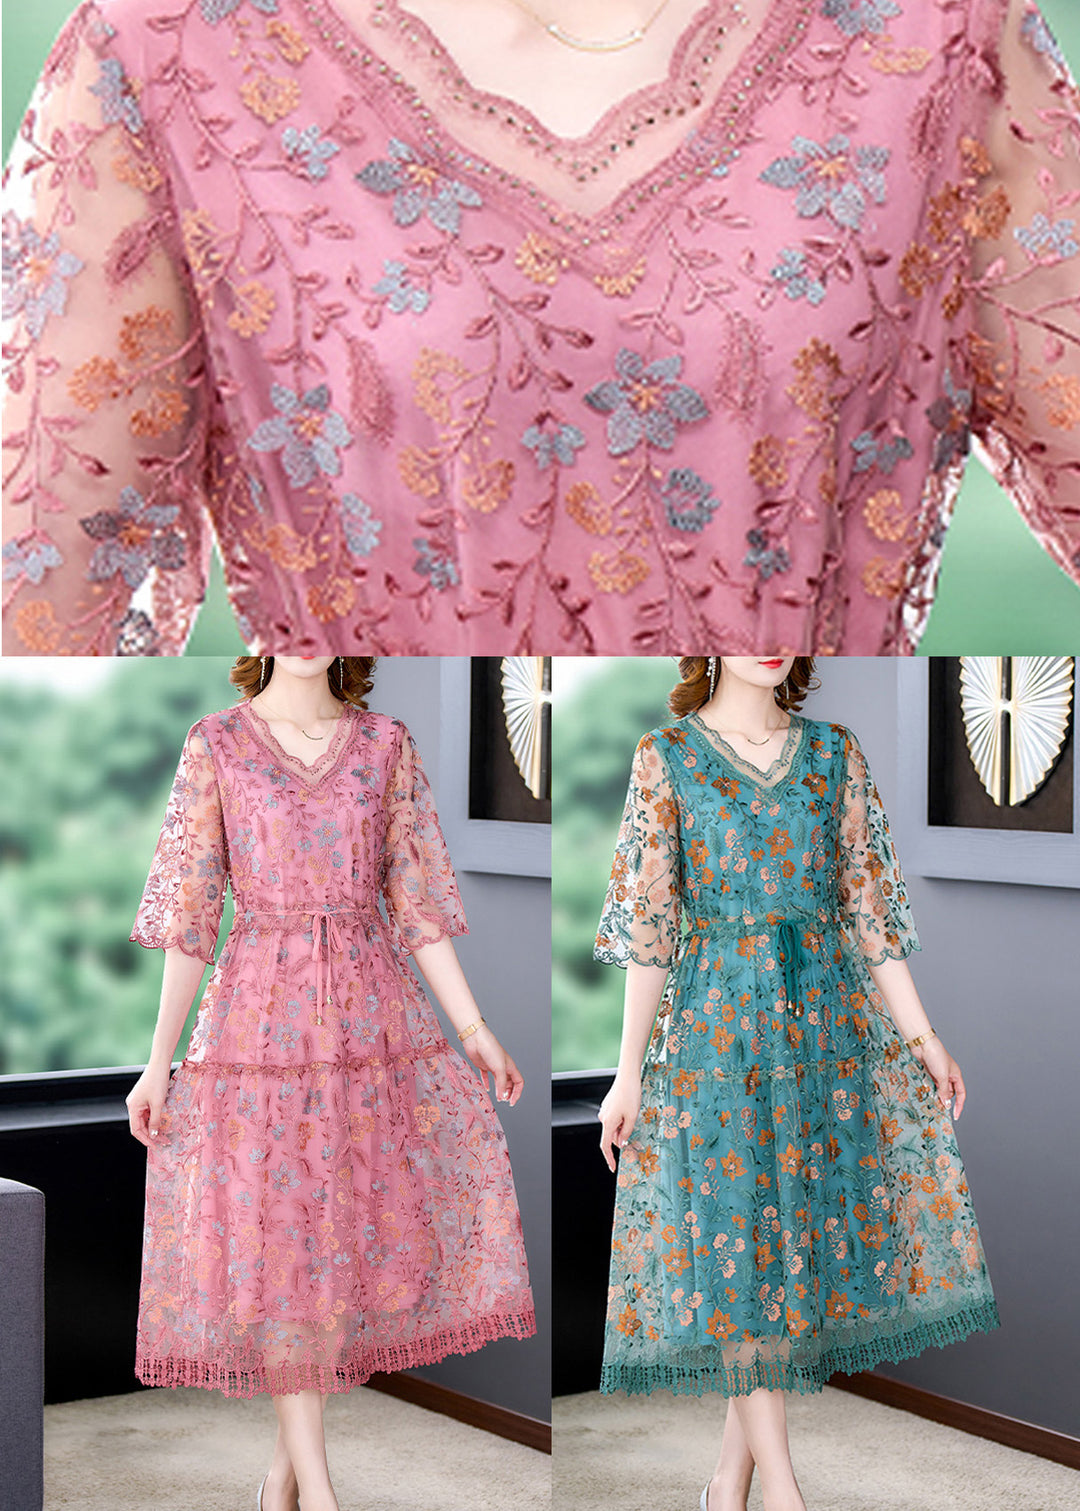 Fashion Pink V Neck Embroideried Silk Long Dress Half Sleeve